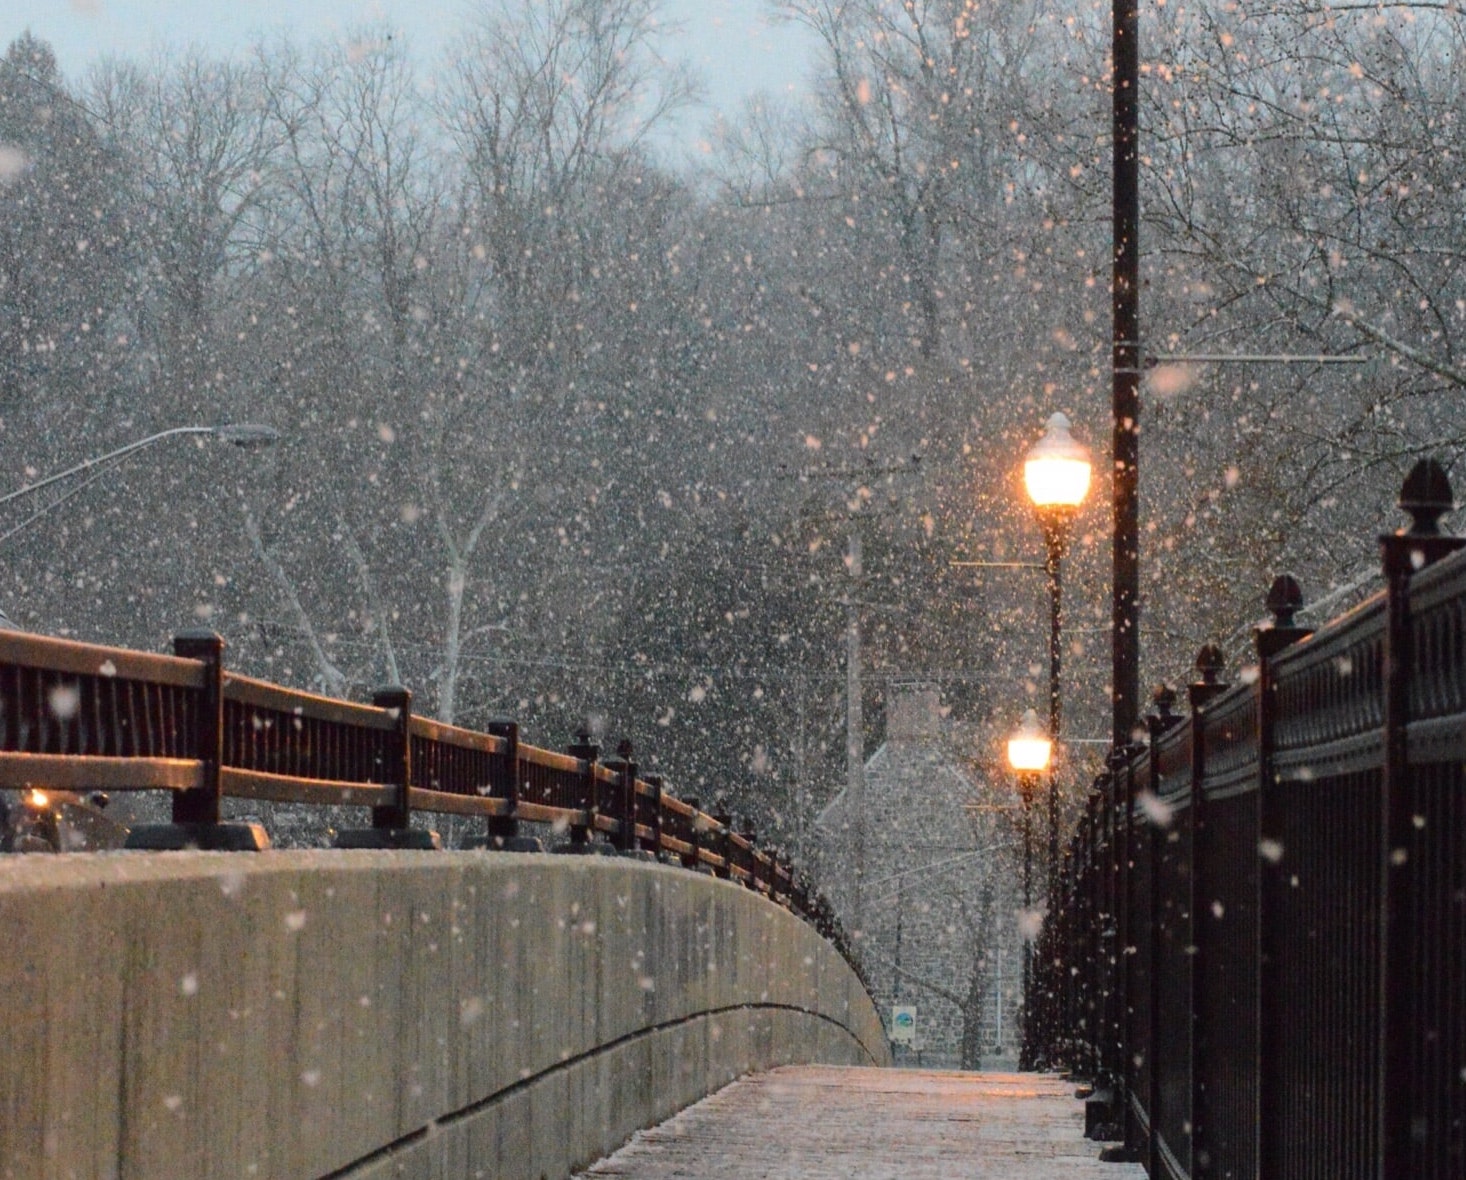 falling snow at dusk on a bridge Photo by Aaron Wilson of Unsplash.